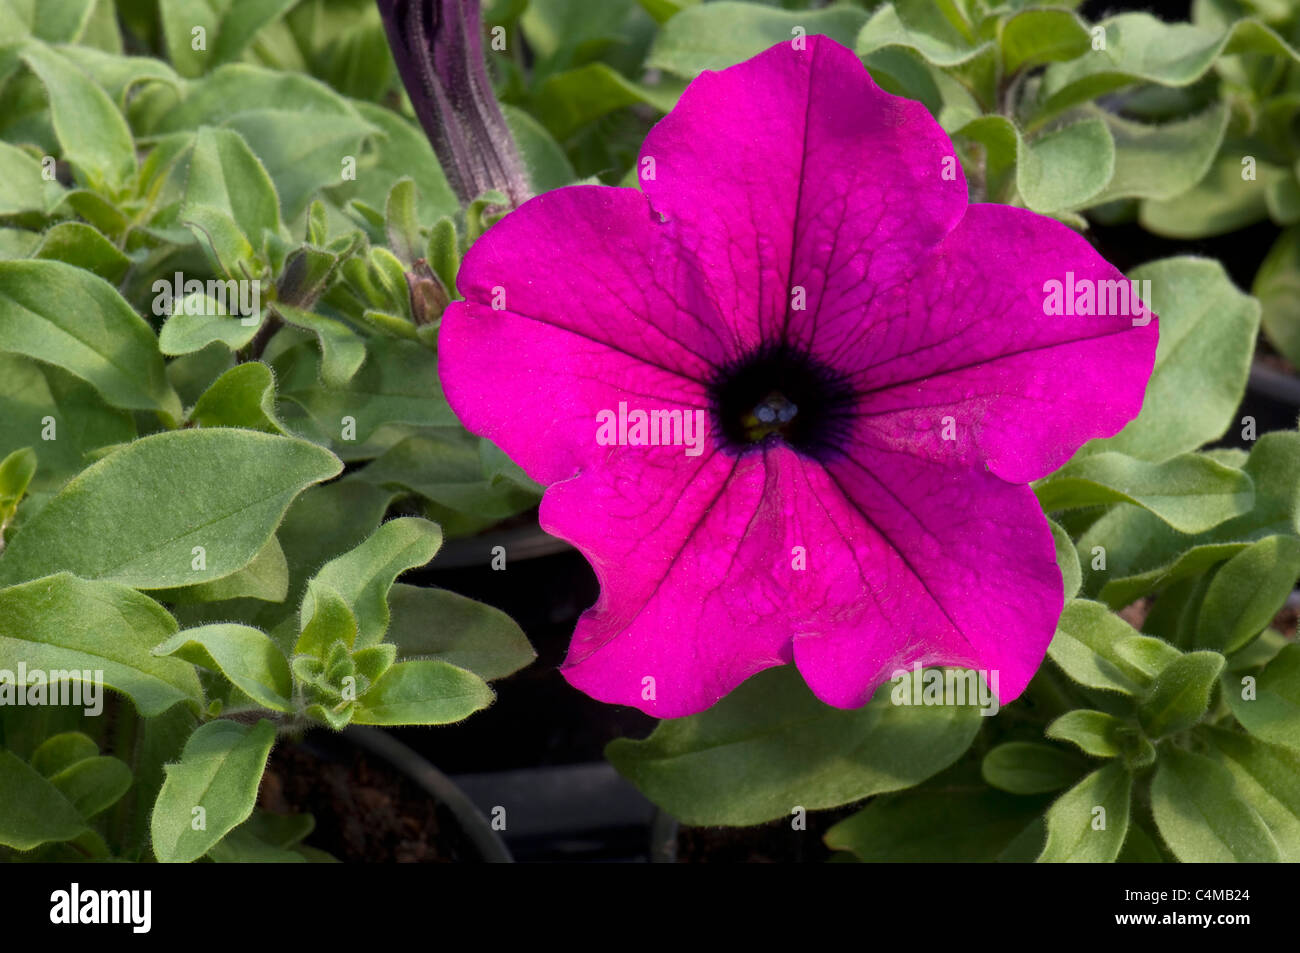 Garten-Petunie (Petunia X hybrida), lila Blume. Stockfoto